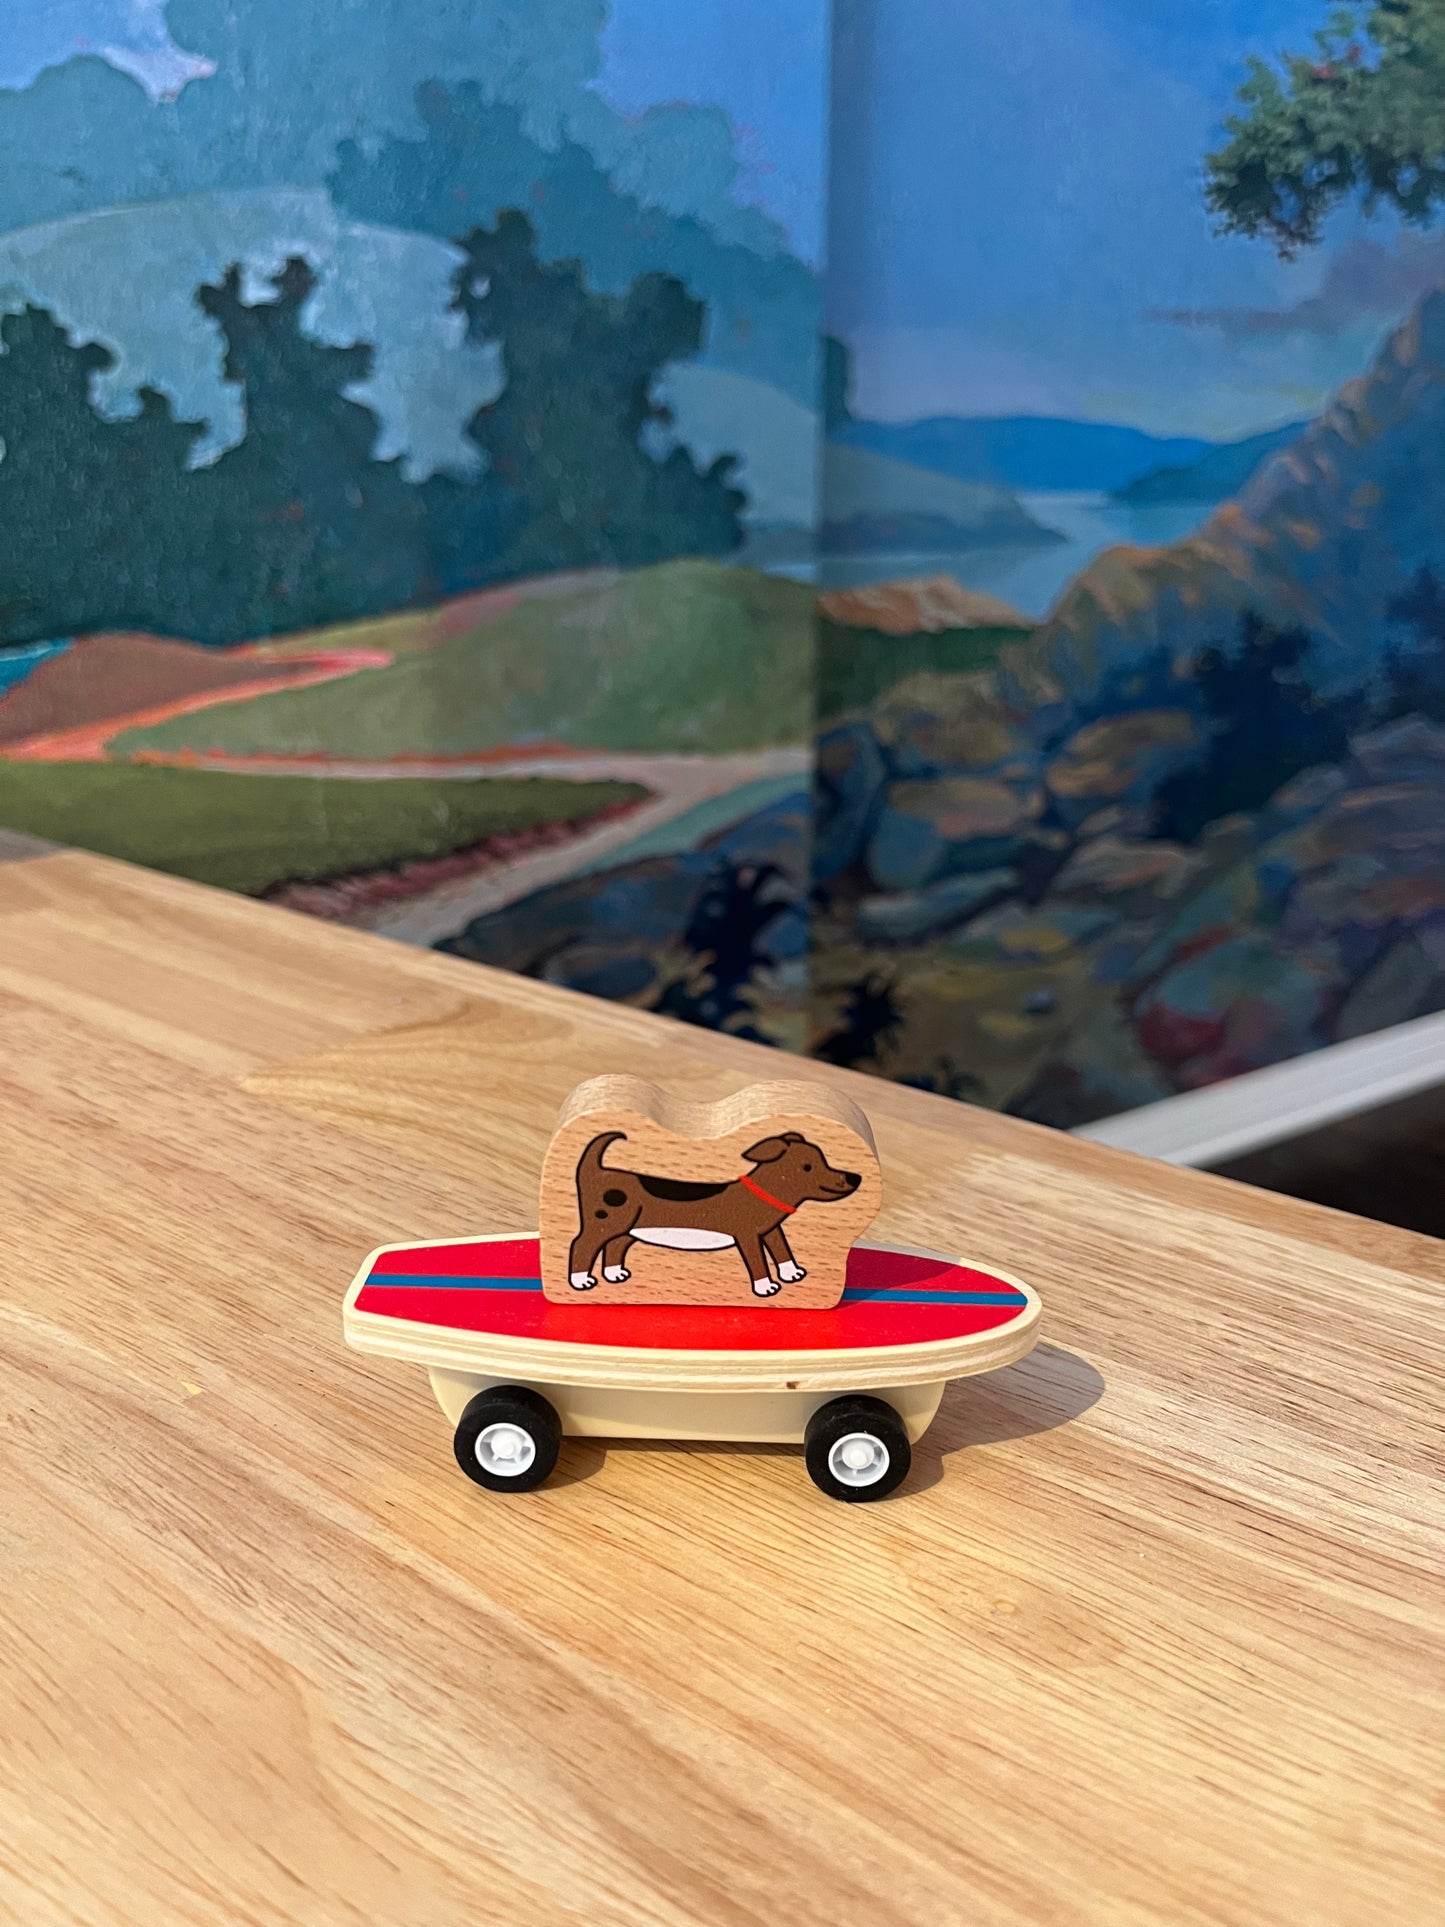 Pull Back Surfer Wooden Toys